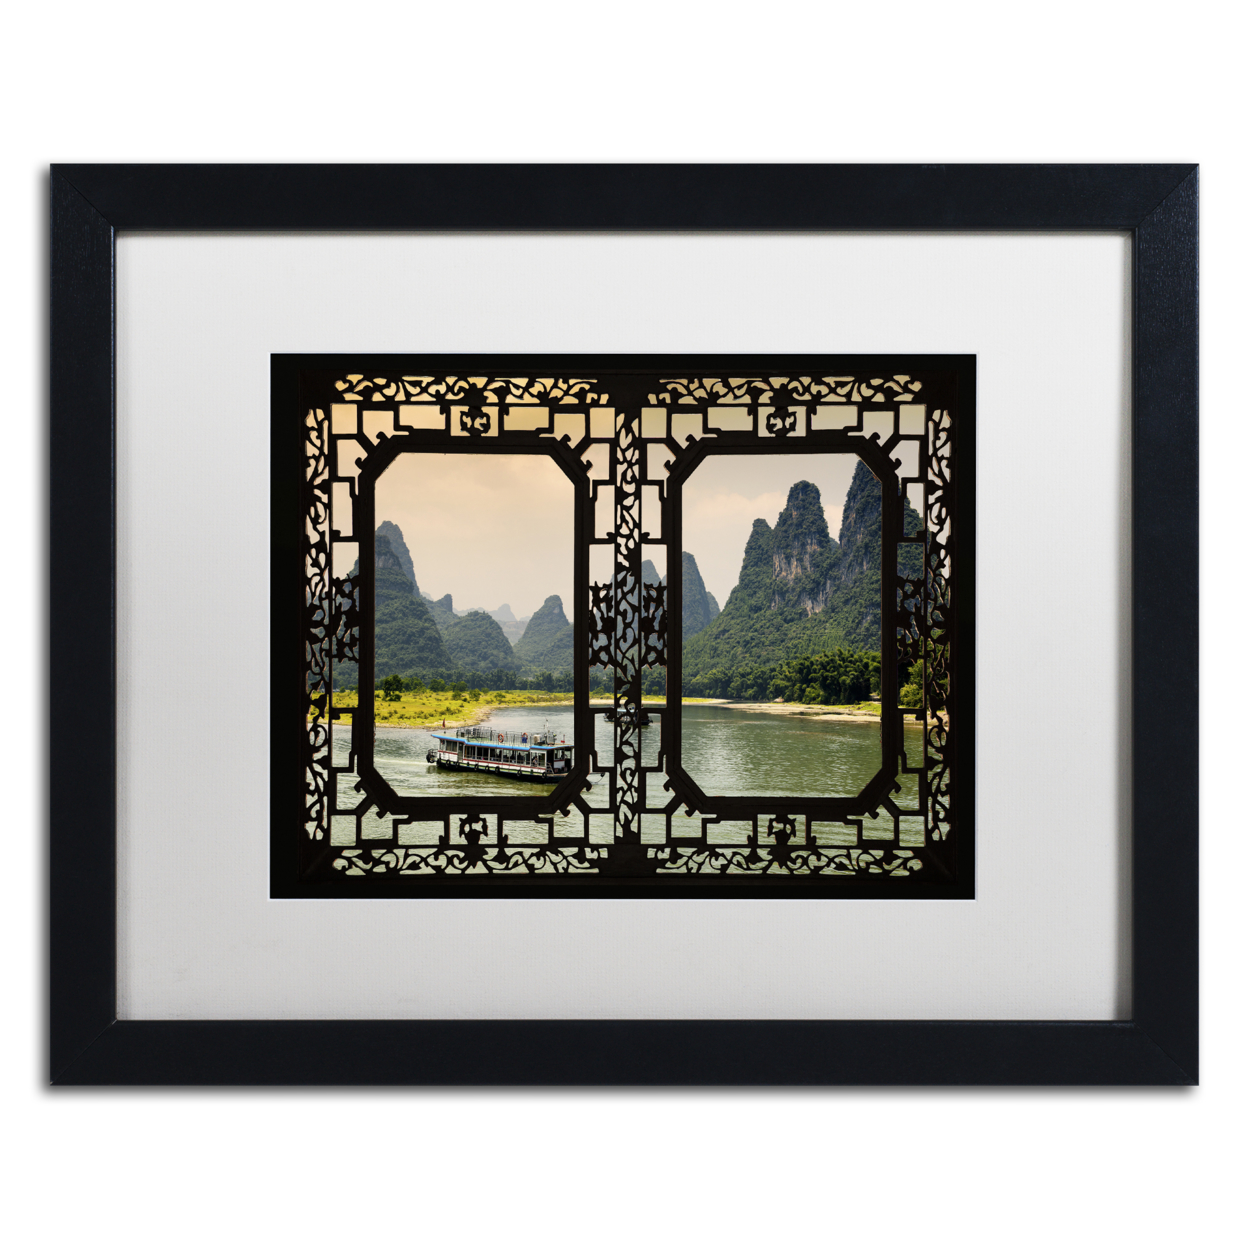 Philippe Hugonnard 'Li River View' Black Wooden Framed Art 18 X 22 Inches